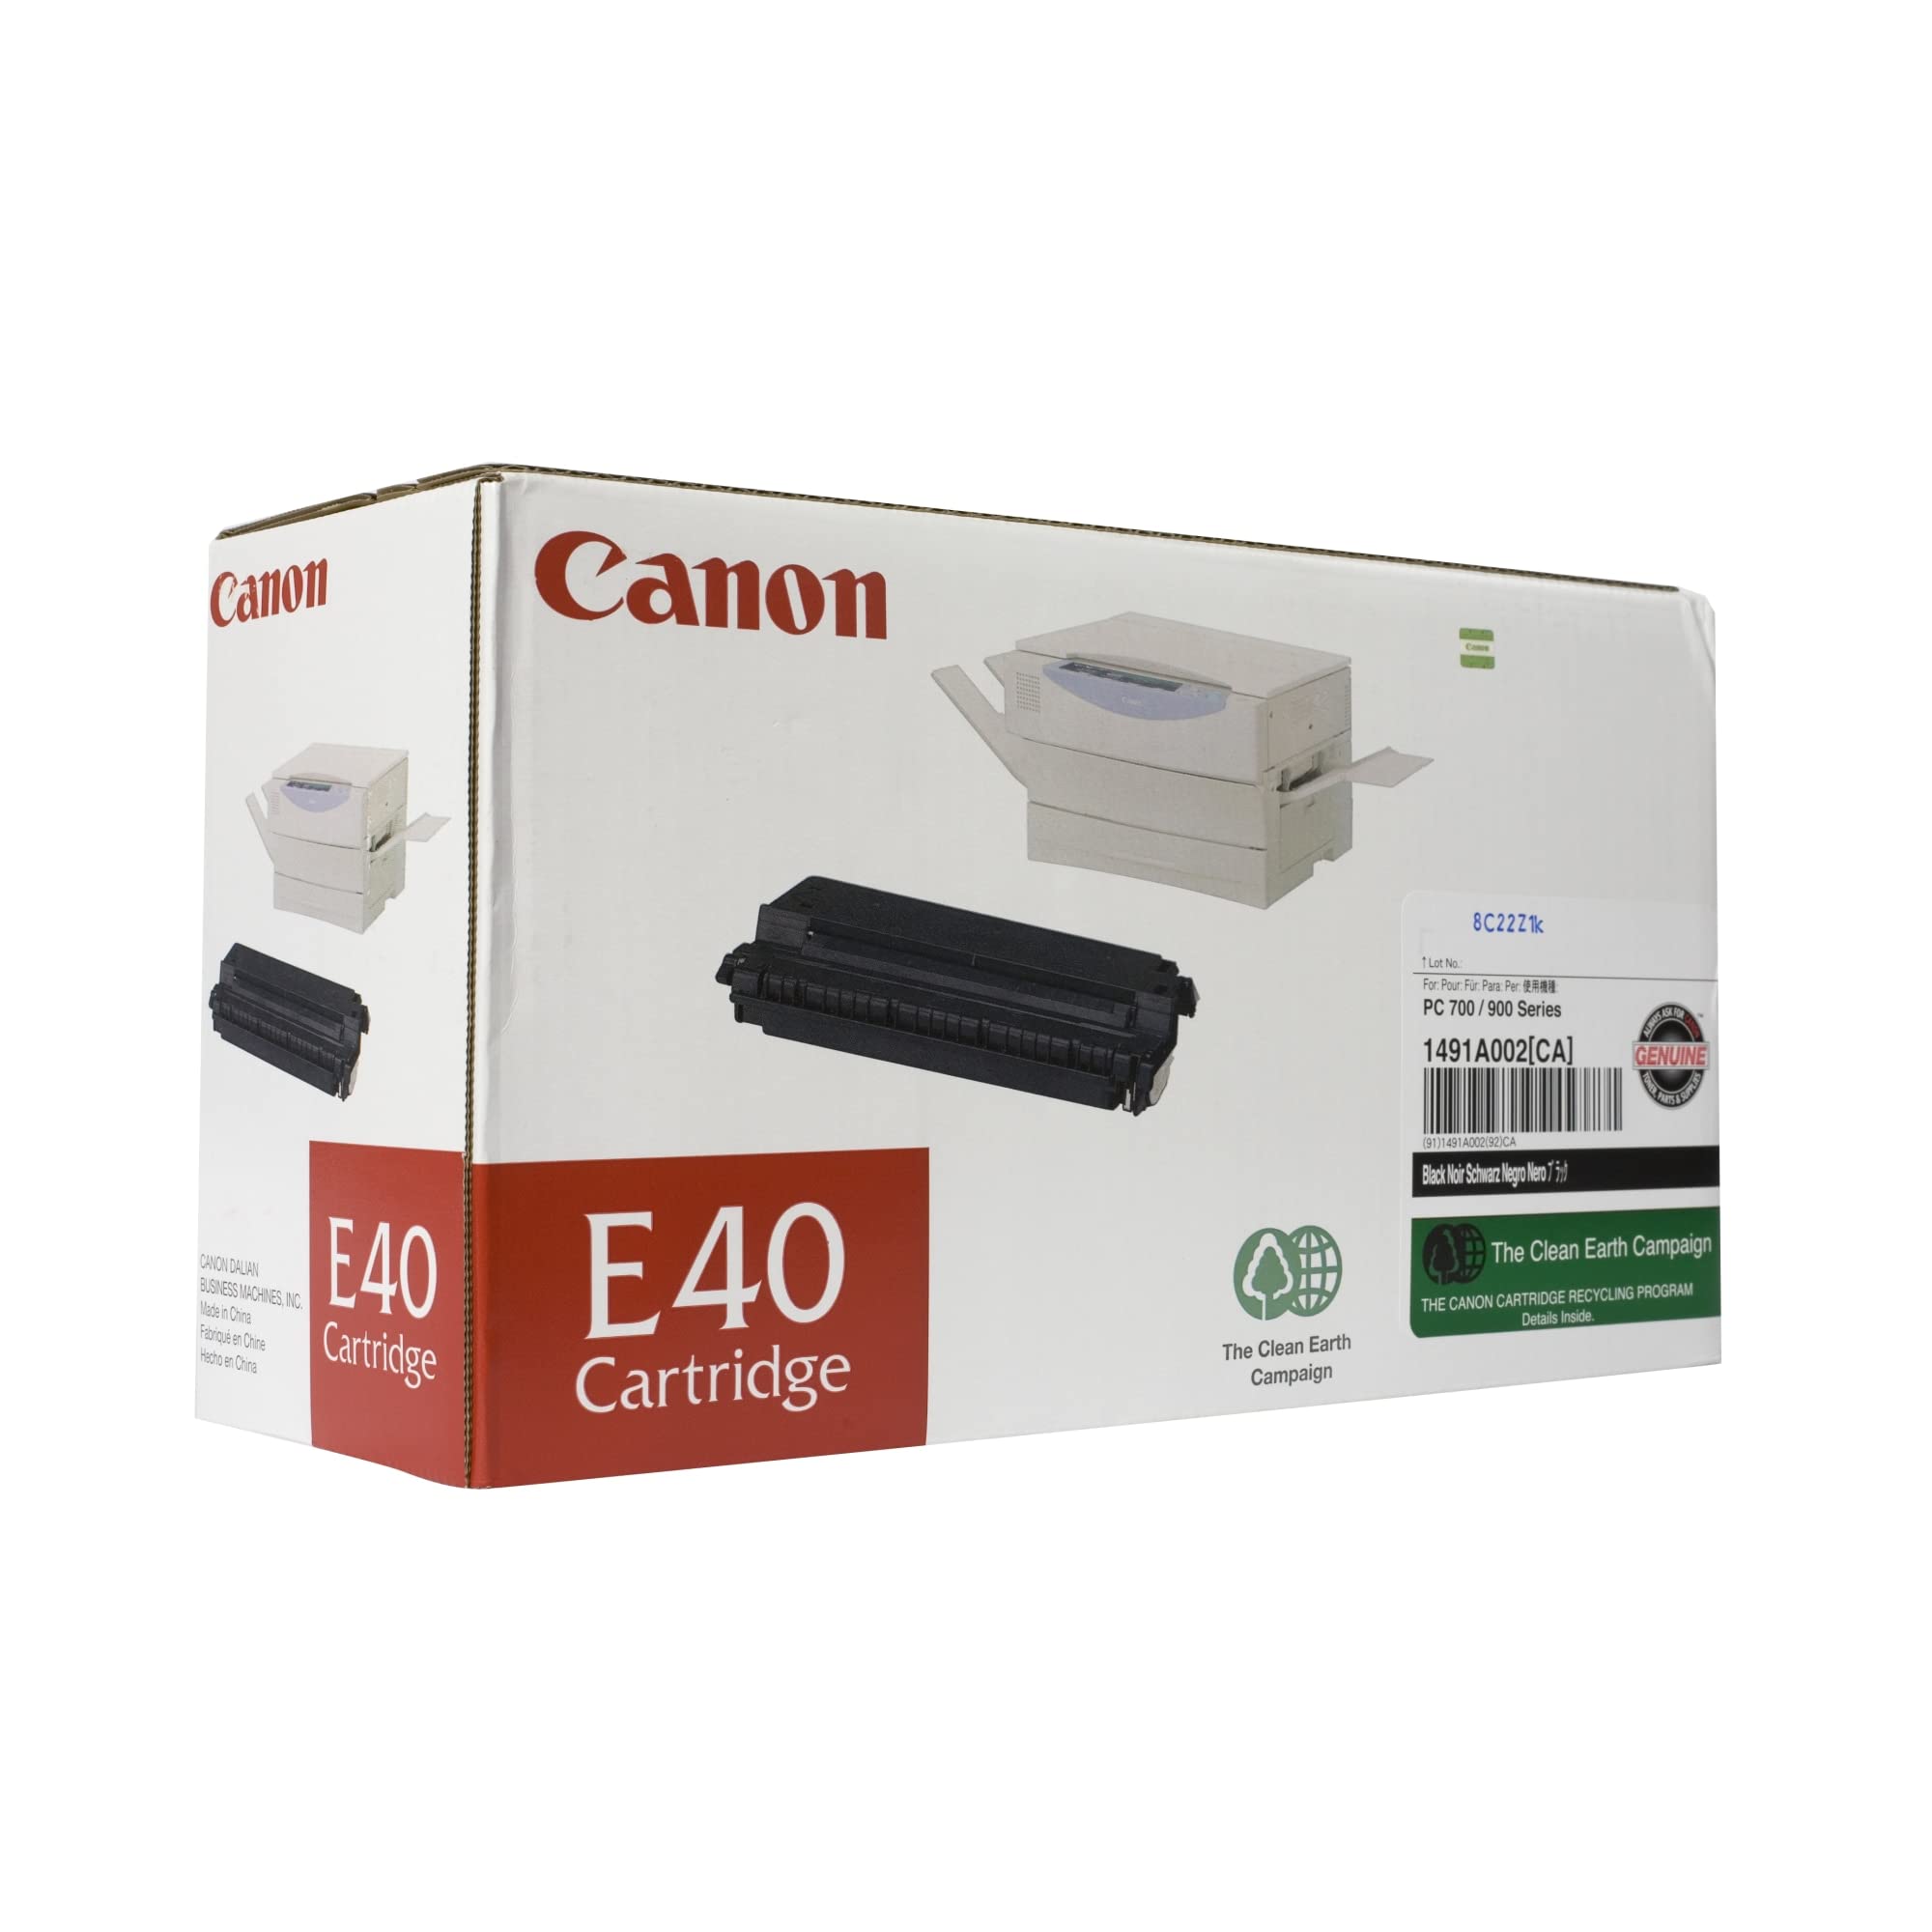 Canon E40 Black Toner Cartridge (1491A002CA)